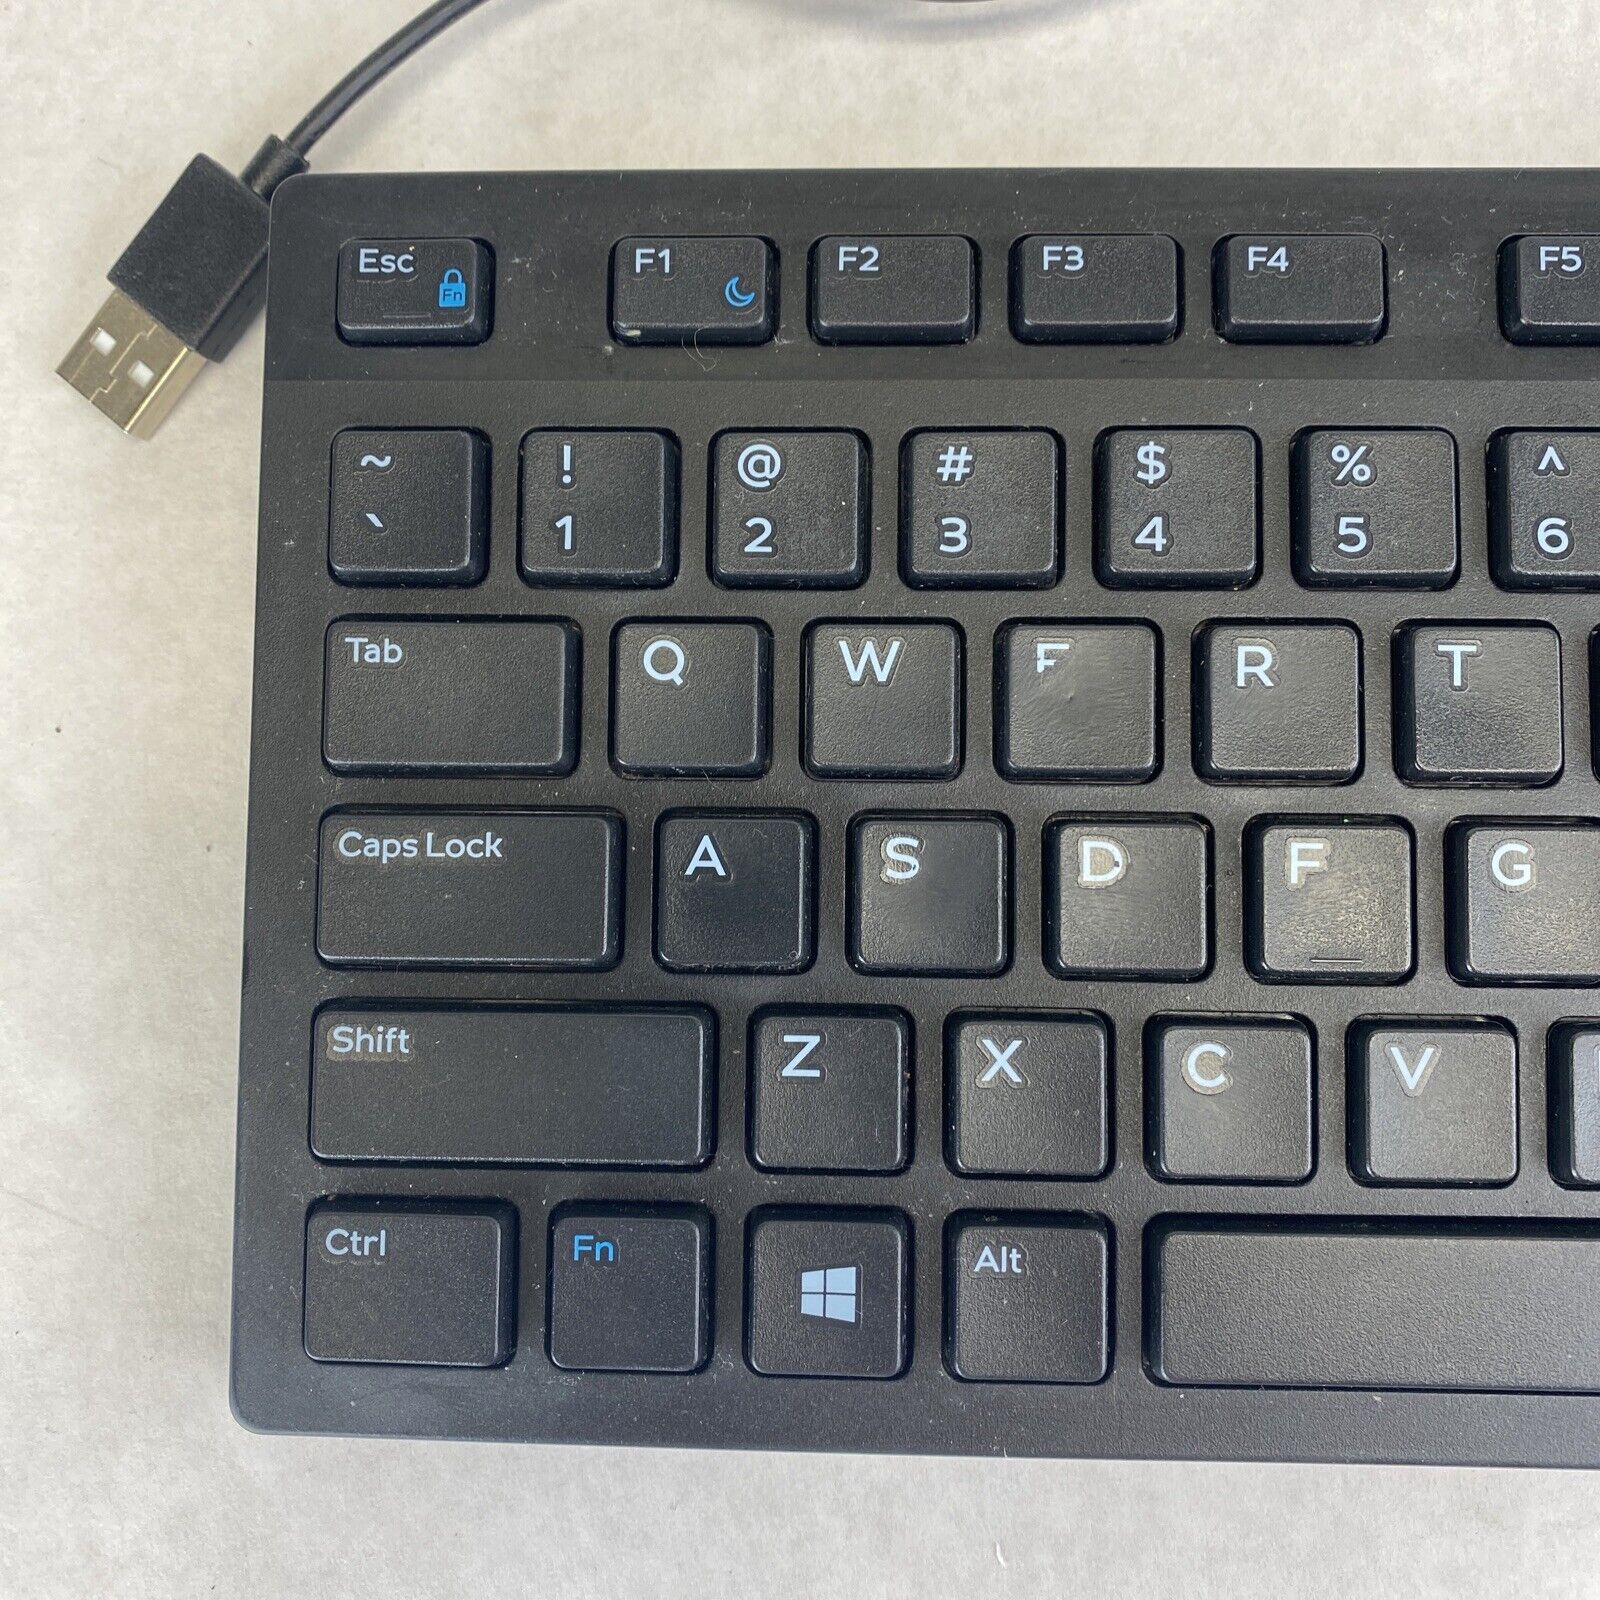 Dell 0N6R8G Black Quiet keyboard to USB with Enhanced Function Keys Mf